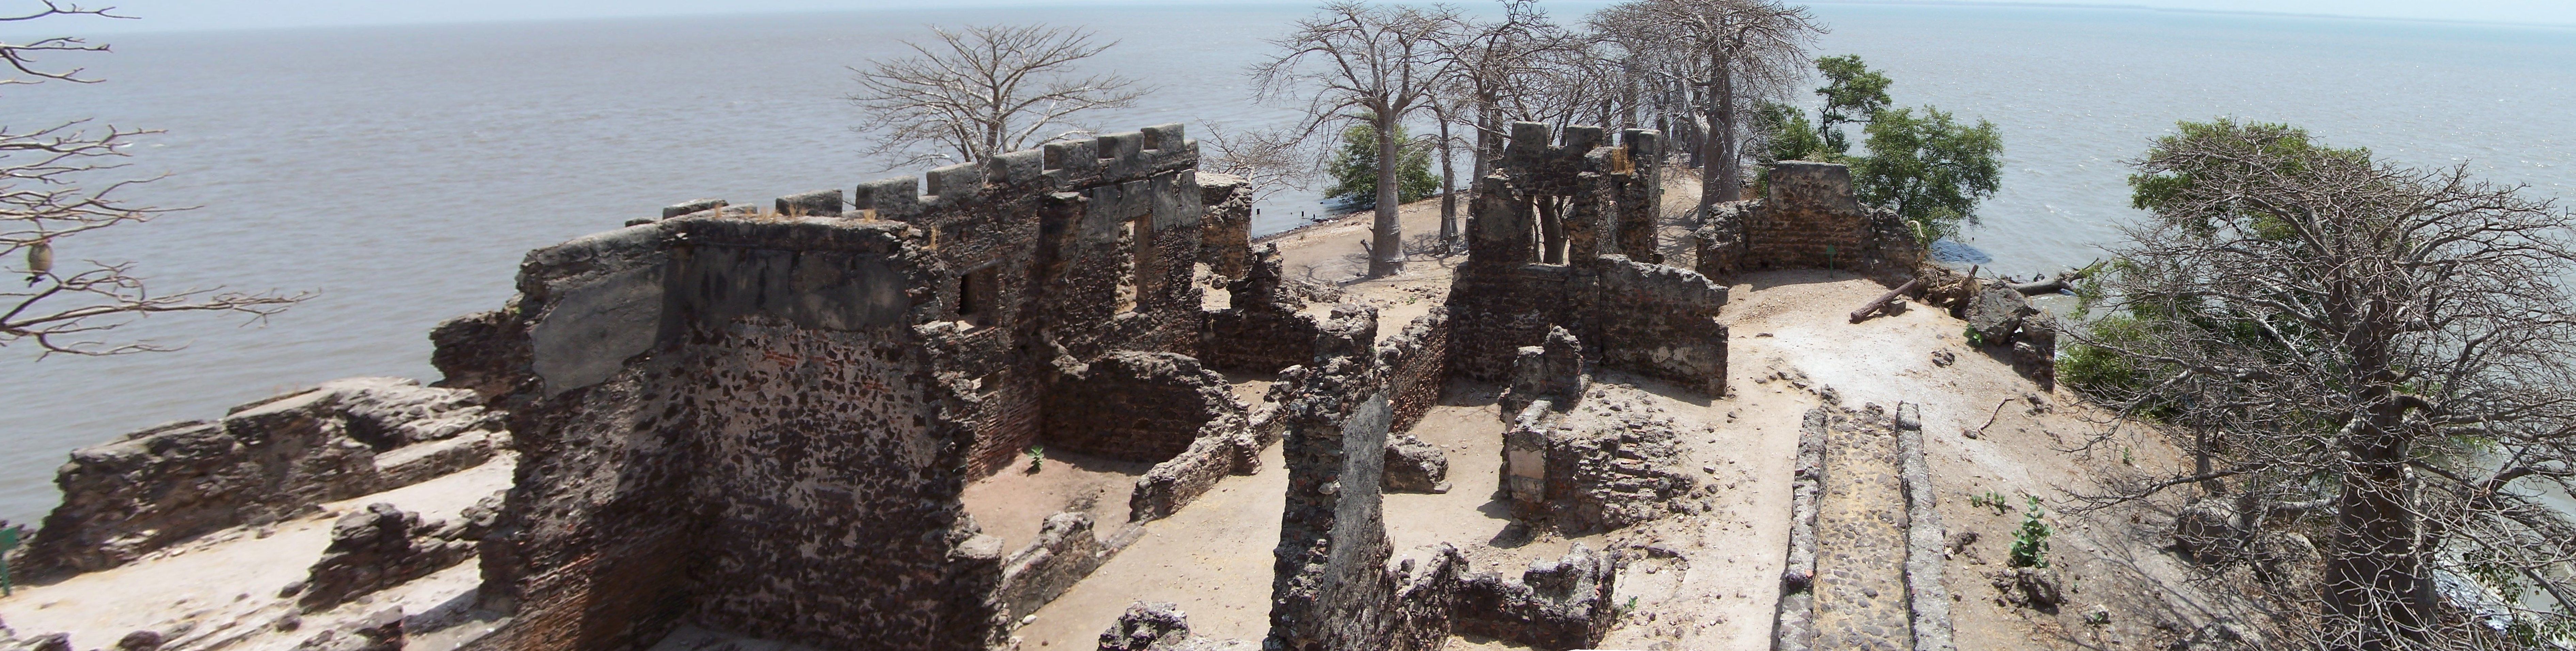 Руины крепости на острове Джеймса, ранее острова святого Андрея